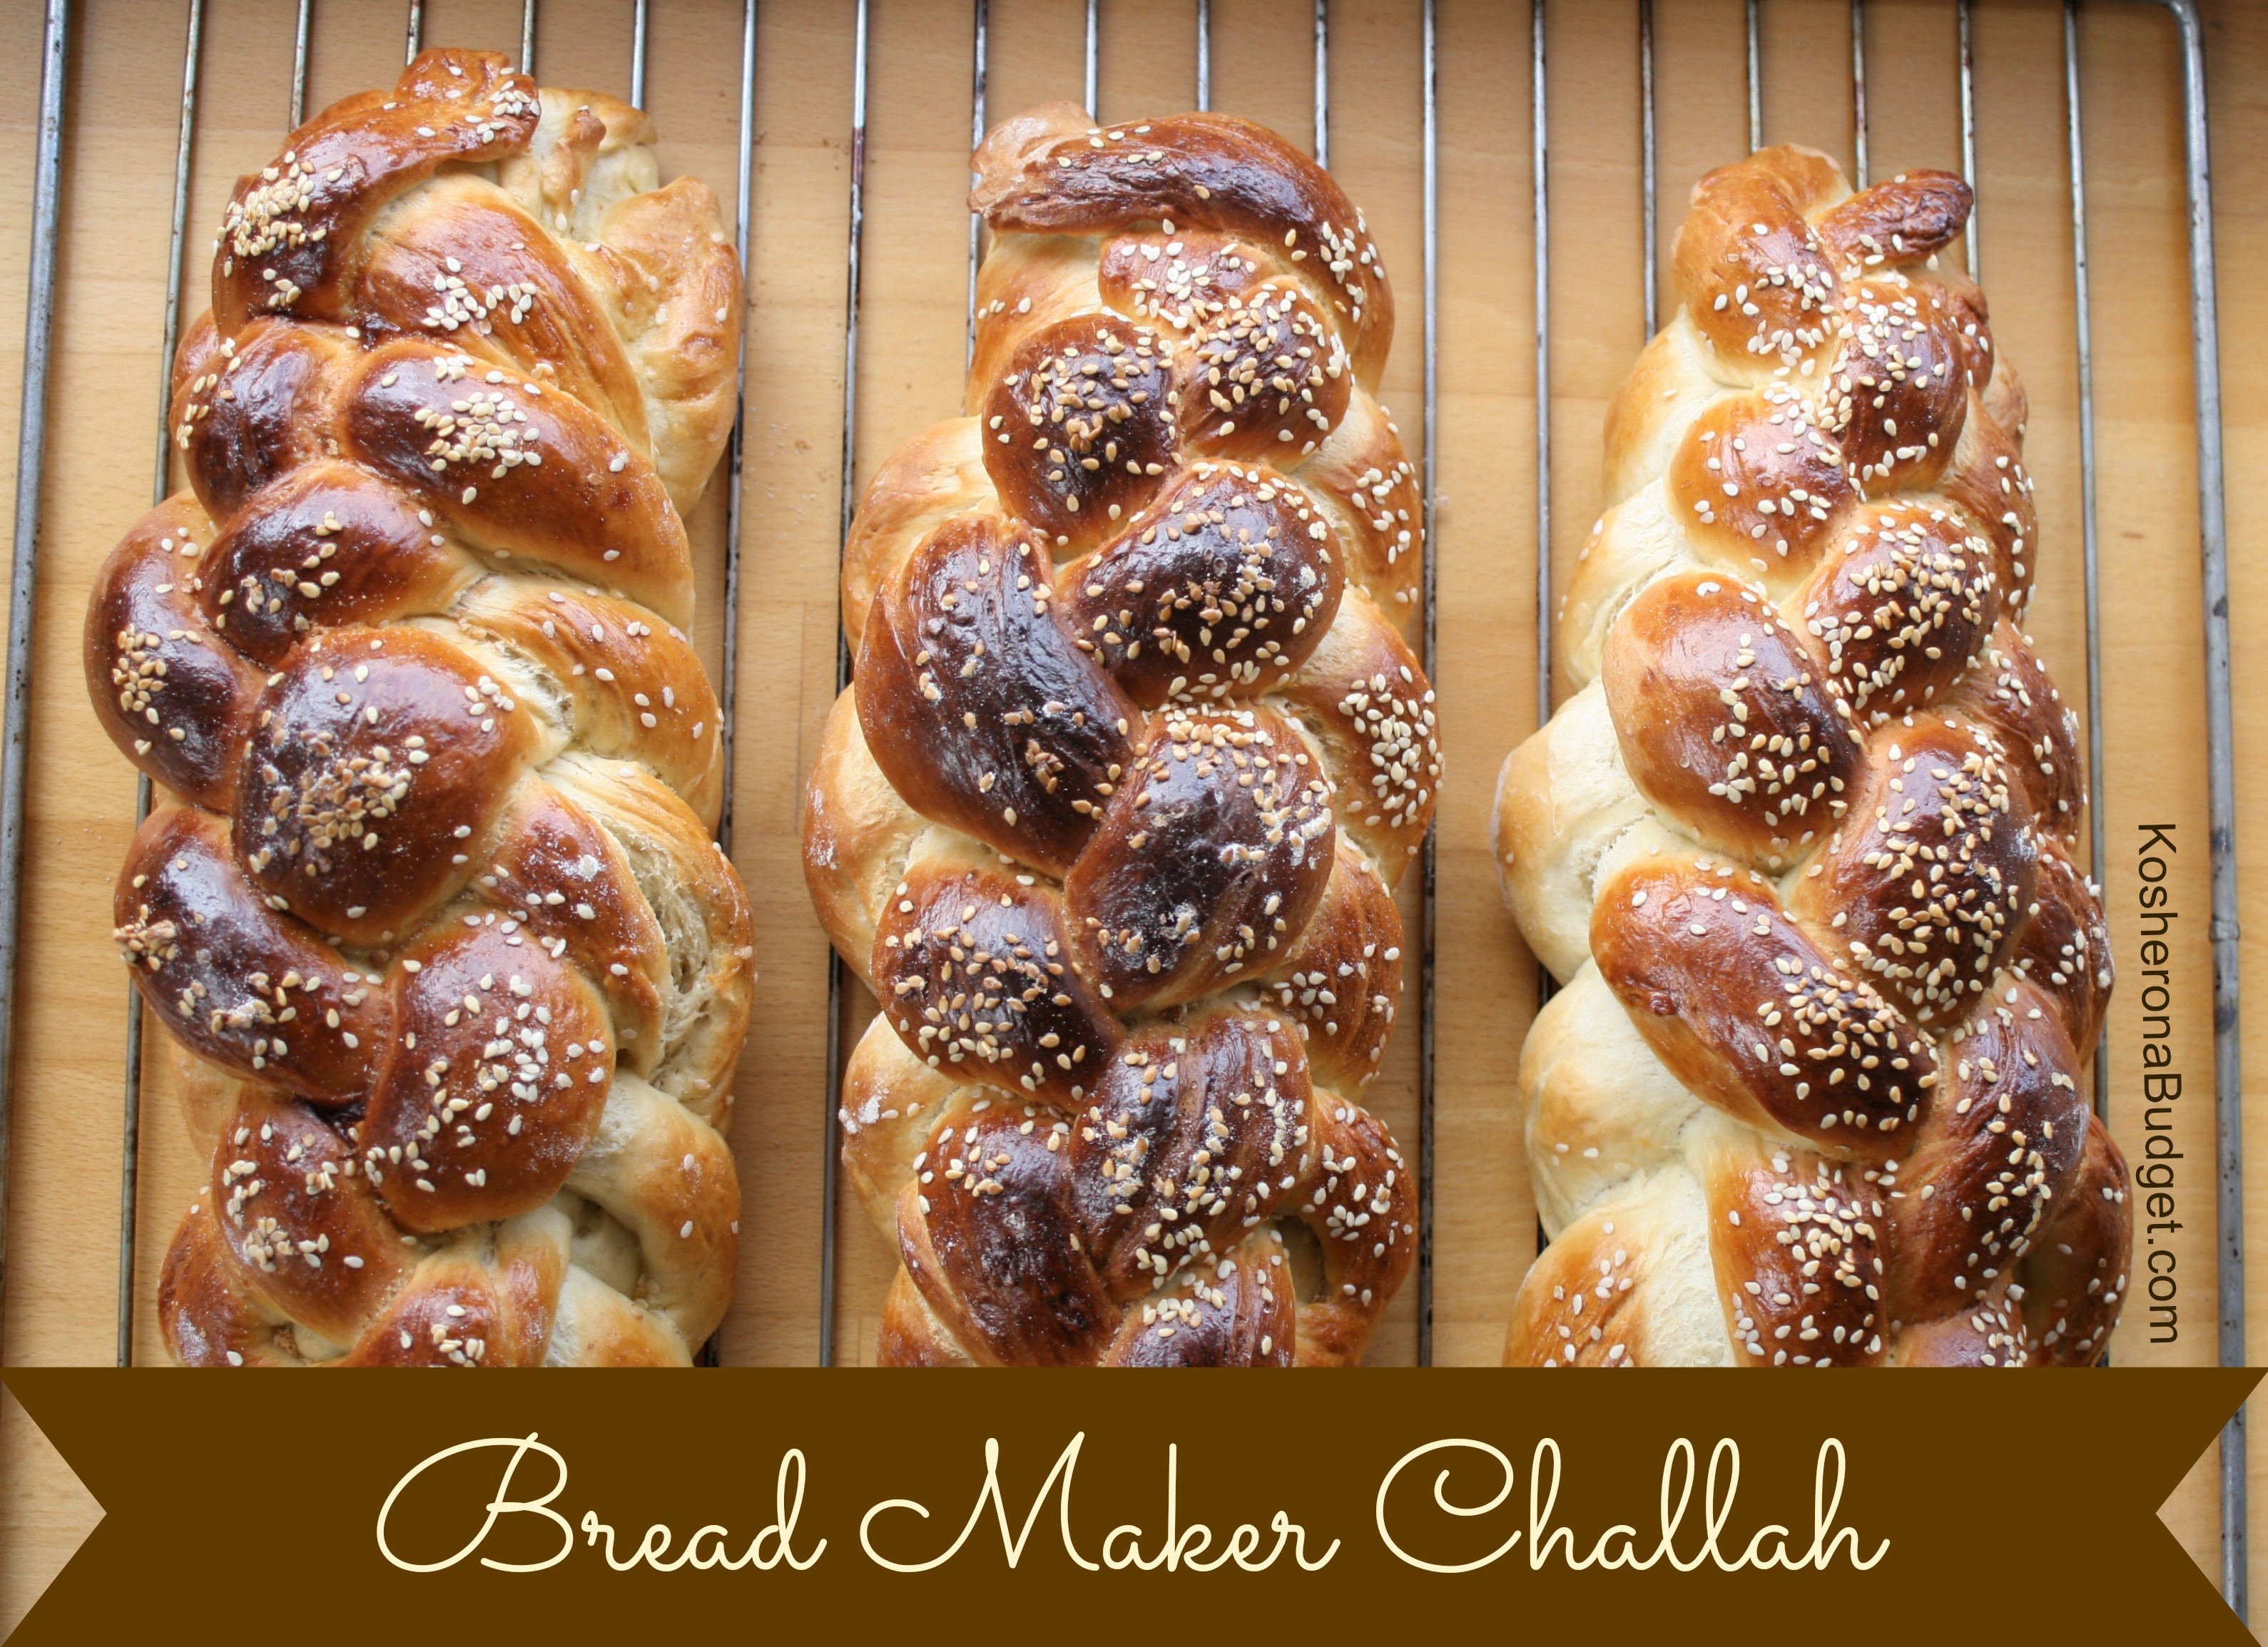 http://kosheronabudget.com/wp-content/uploads/2013/01/bread-maker-challah.jpg